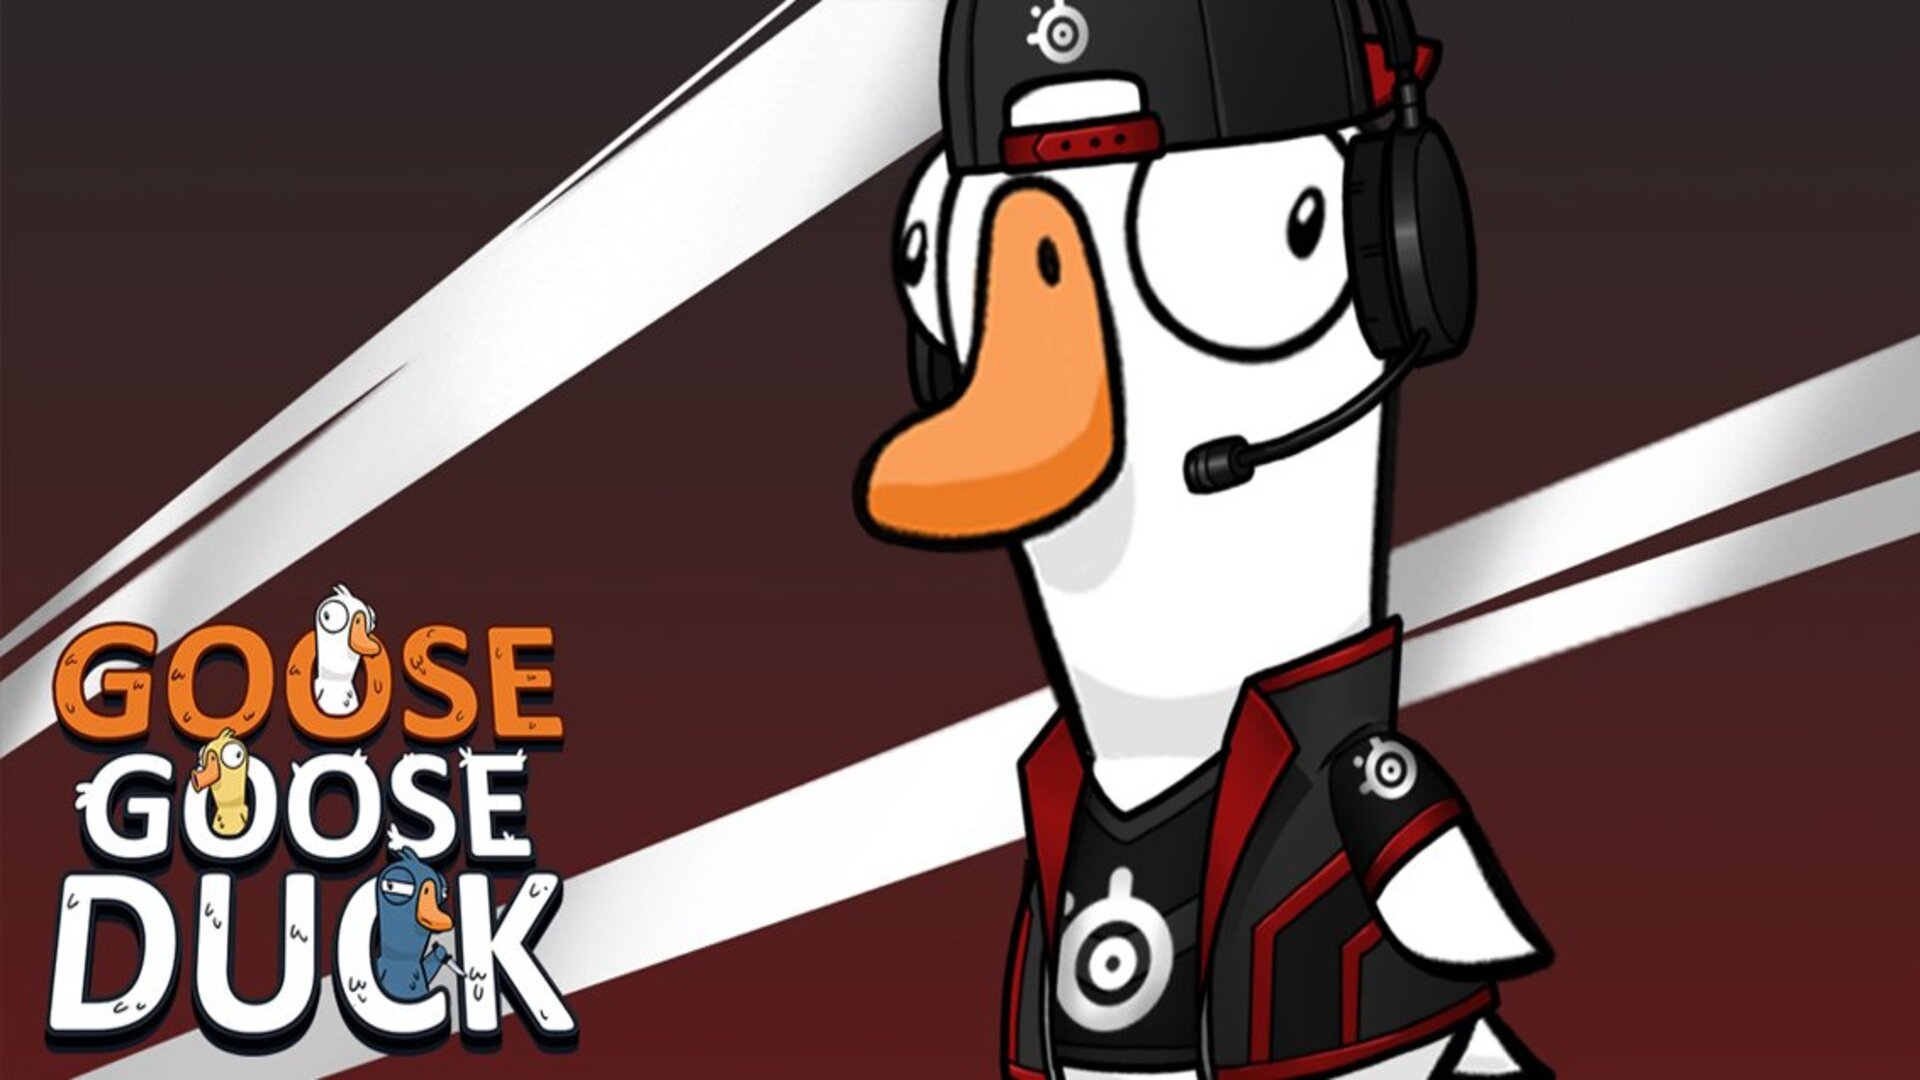 Goose Goose Duck - Steelseries Outfit Pack Digital Download CD Key [USD 3.79]